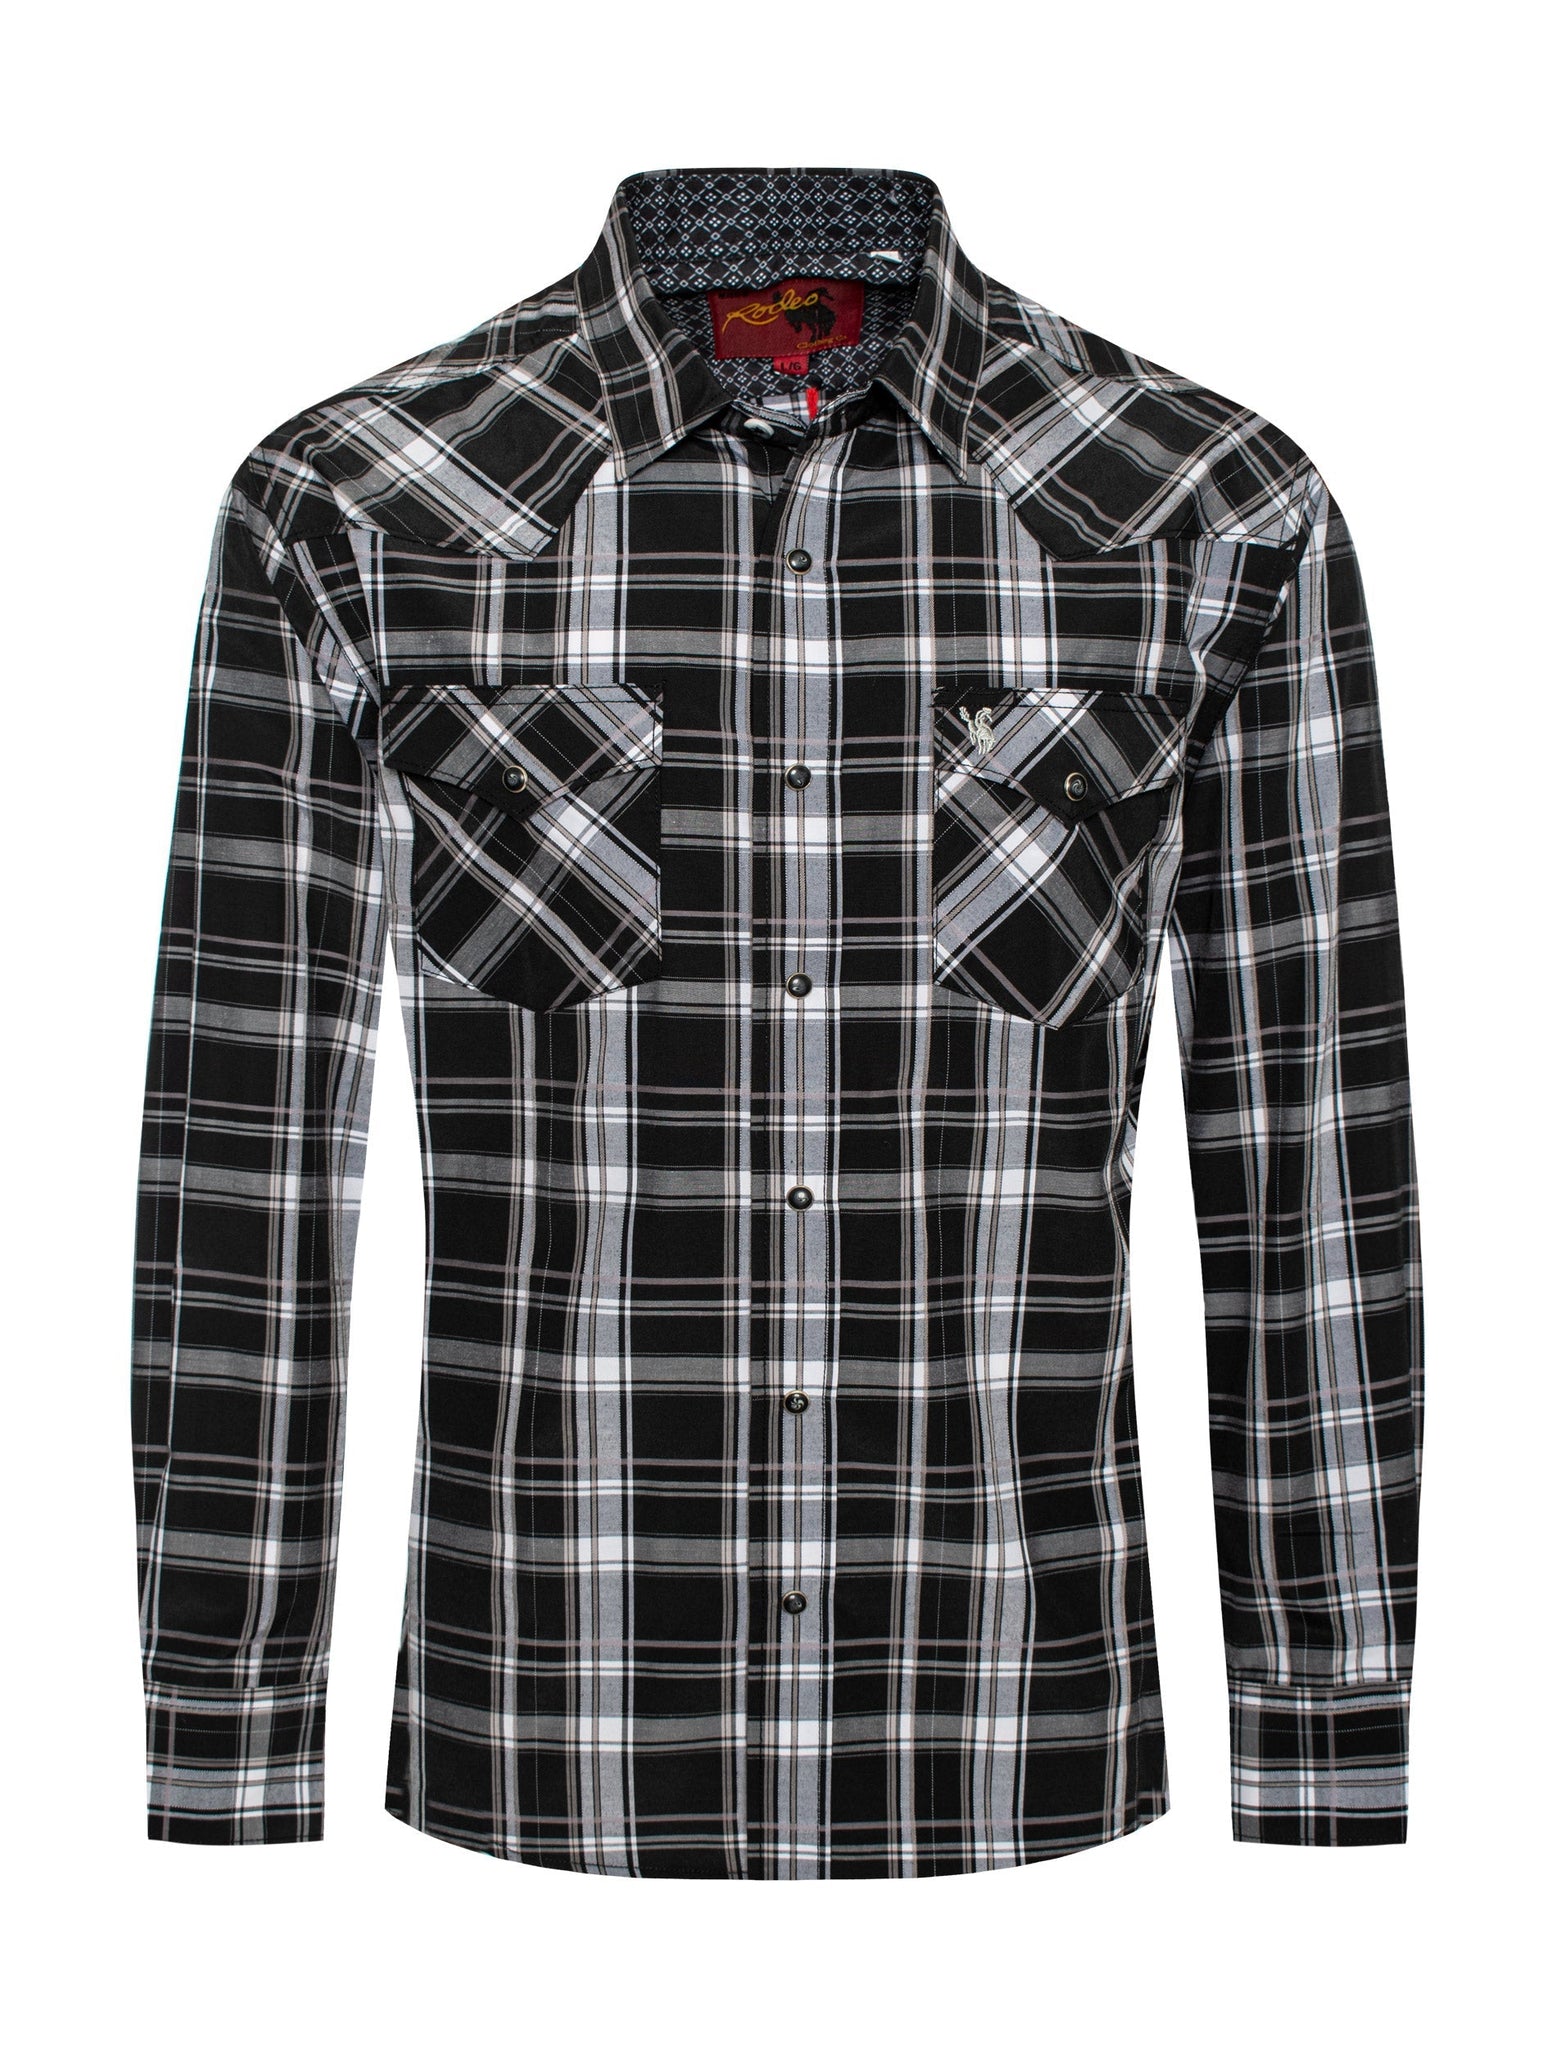 Men's Western Long Sleeve Pearl Snap Plaid Shirt -PS400-476